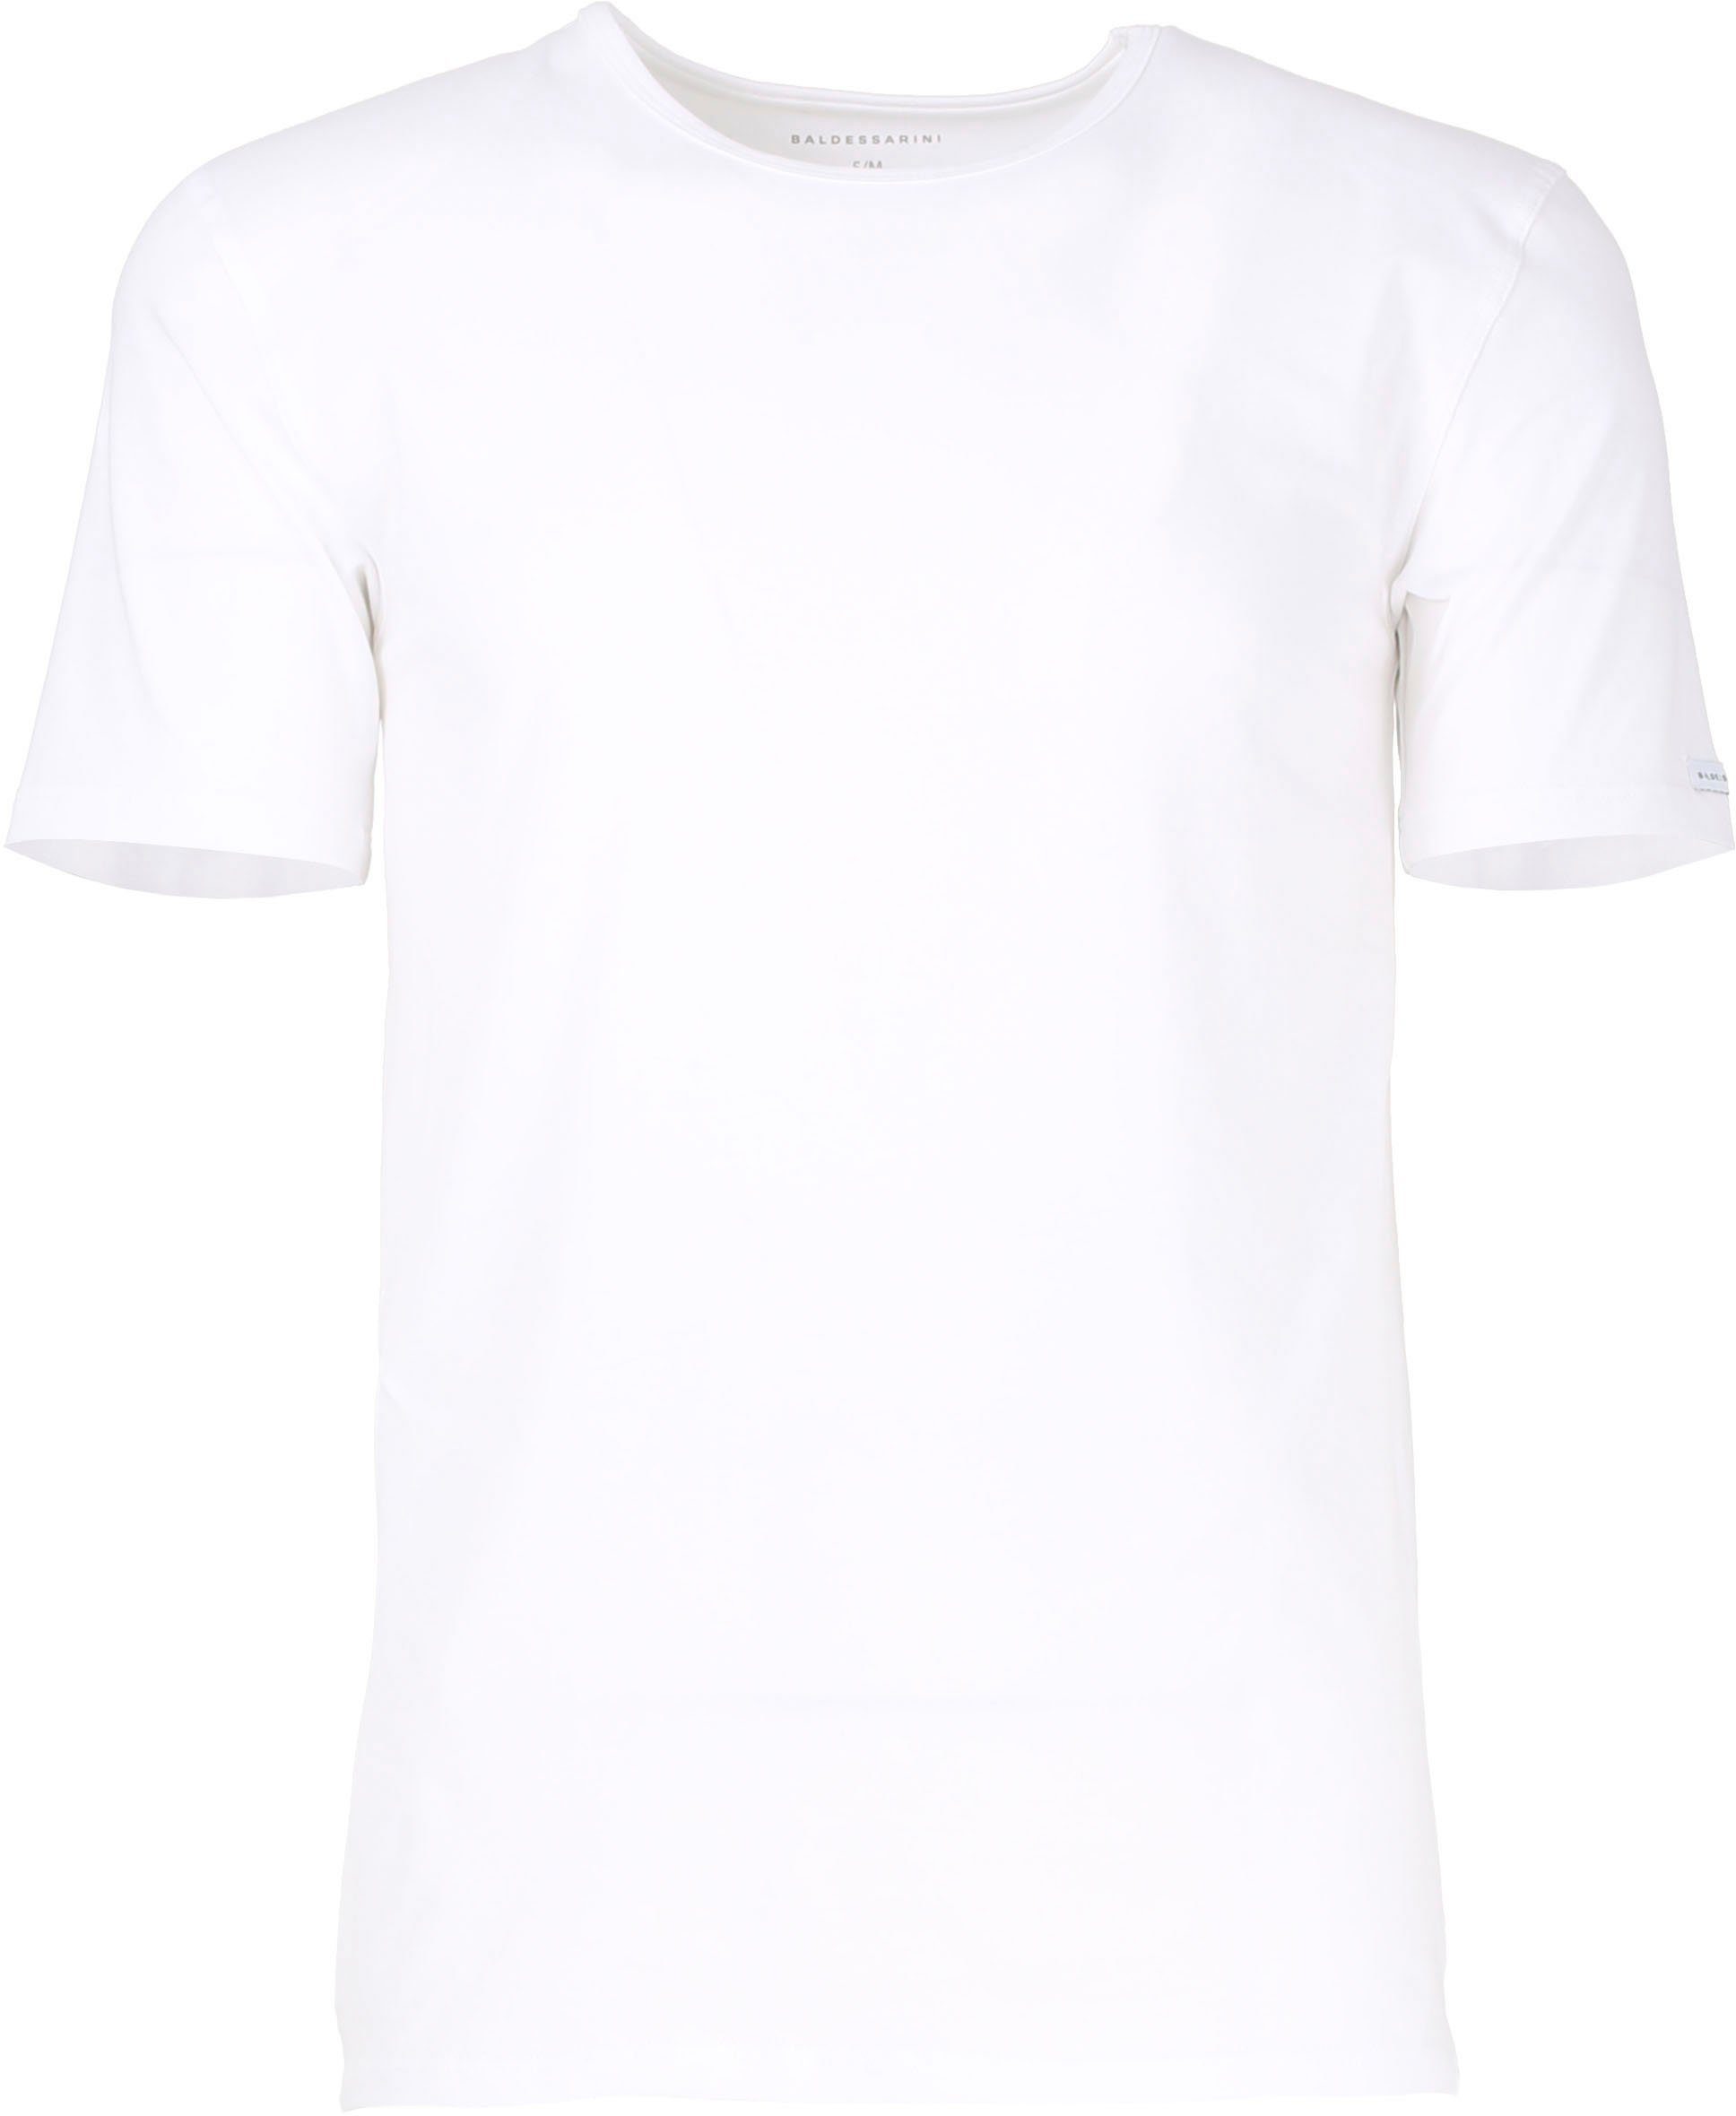 BALDESSARINI Shirt, 1/2, T-Shirt Rundhal weiß-hell-uni